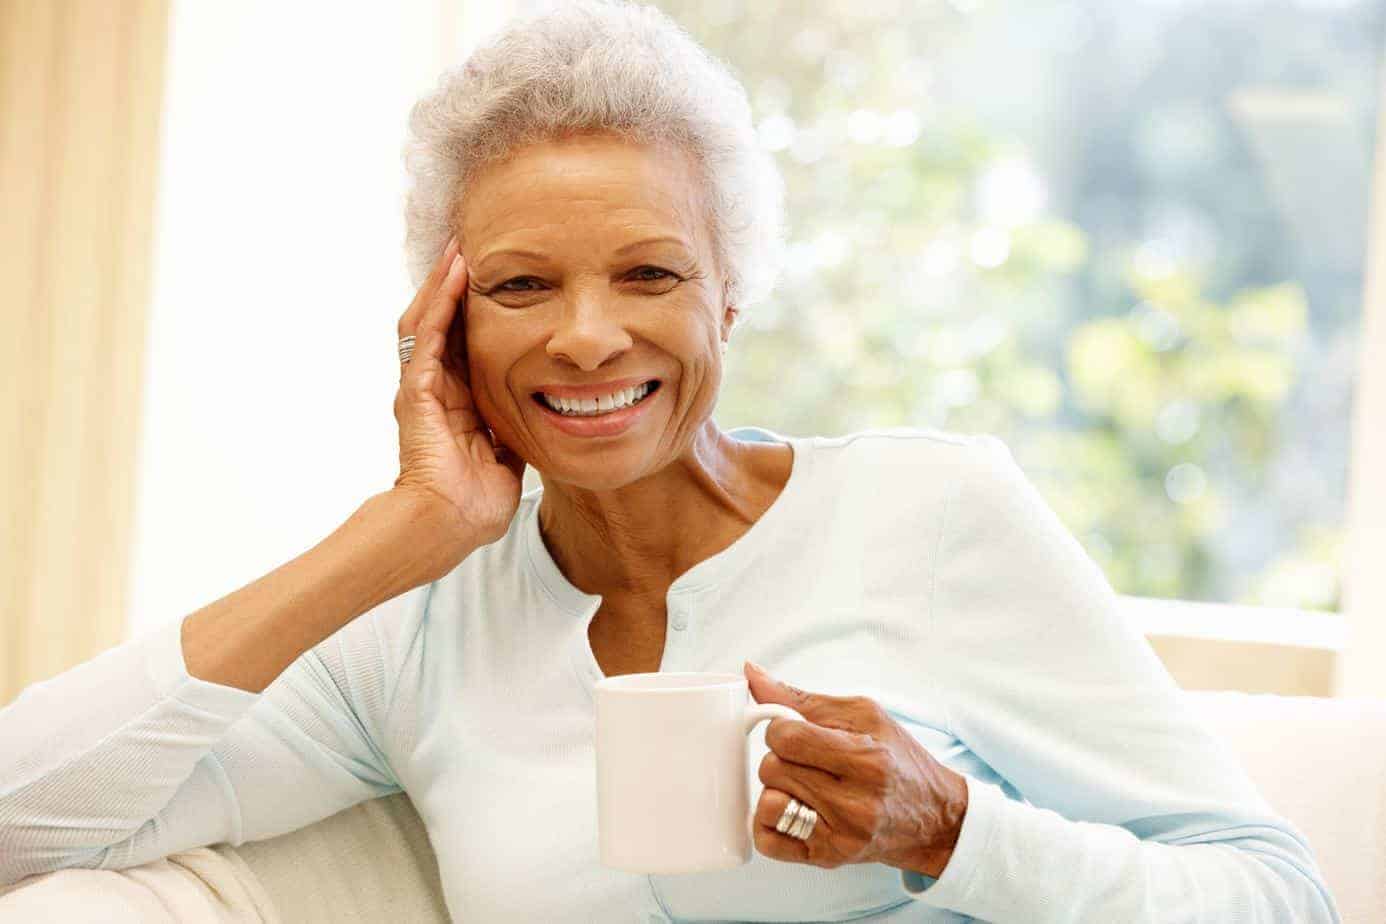 Elderly black women with gray hair drinking coffee